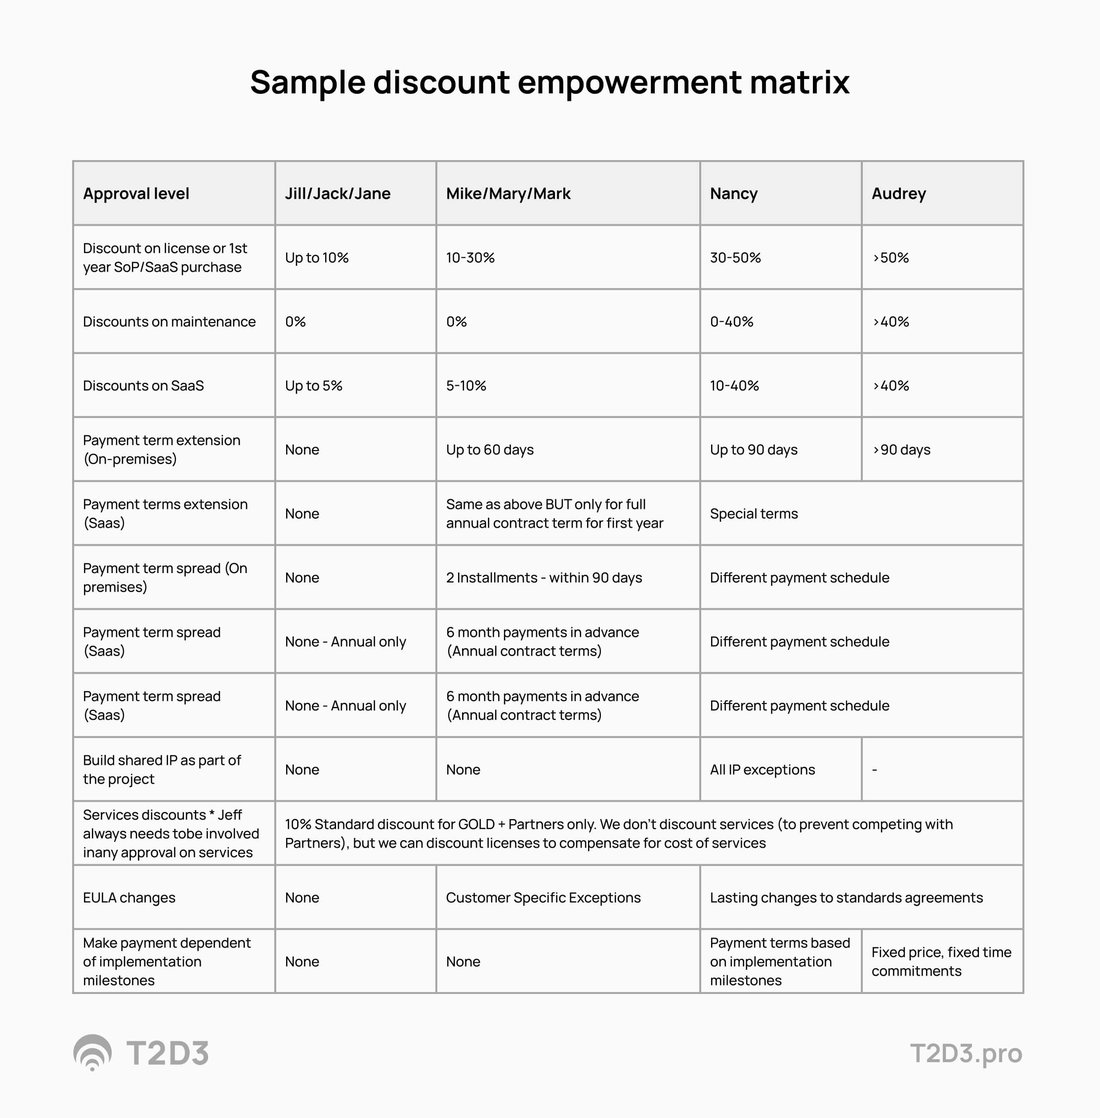 Sample discount empowerment matrix